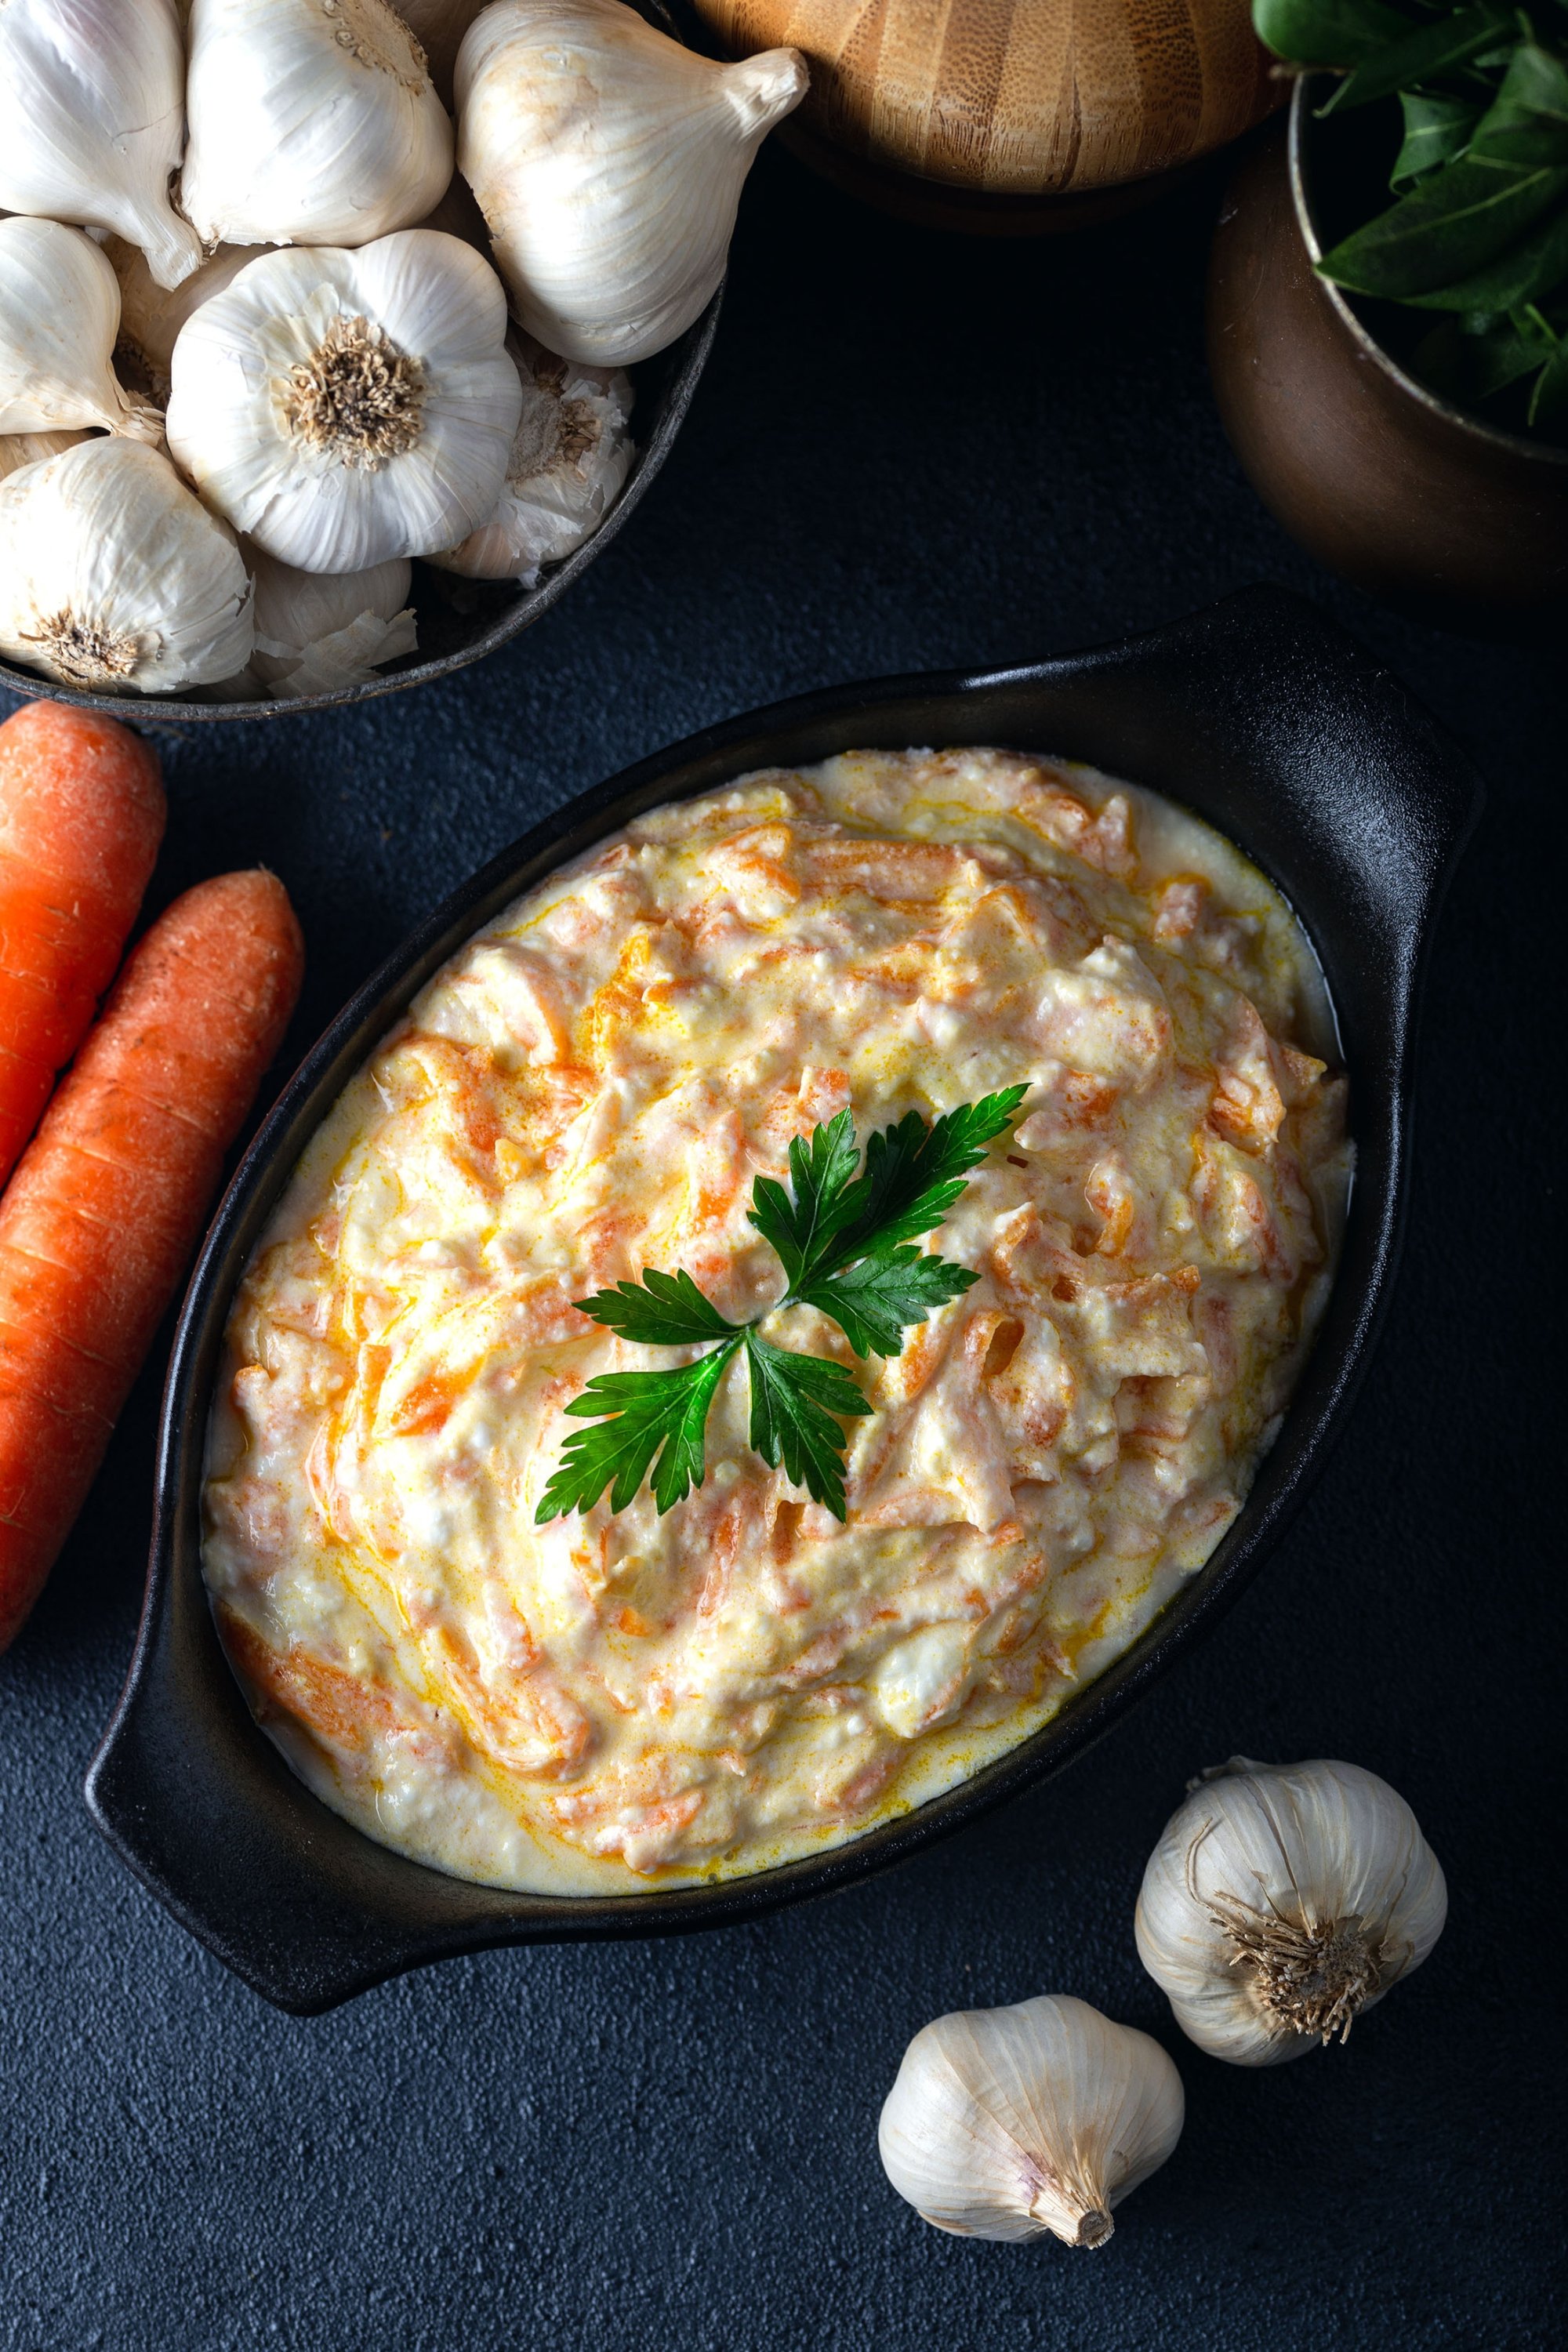 Carrot tarator is a classic yogurt-based Turkish meze. (Shutterstock Photo)